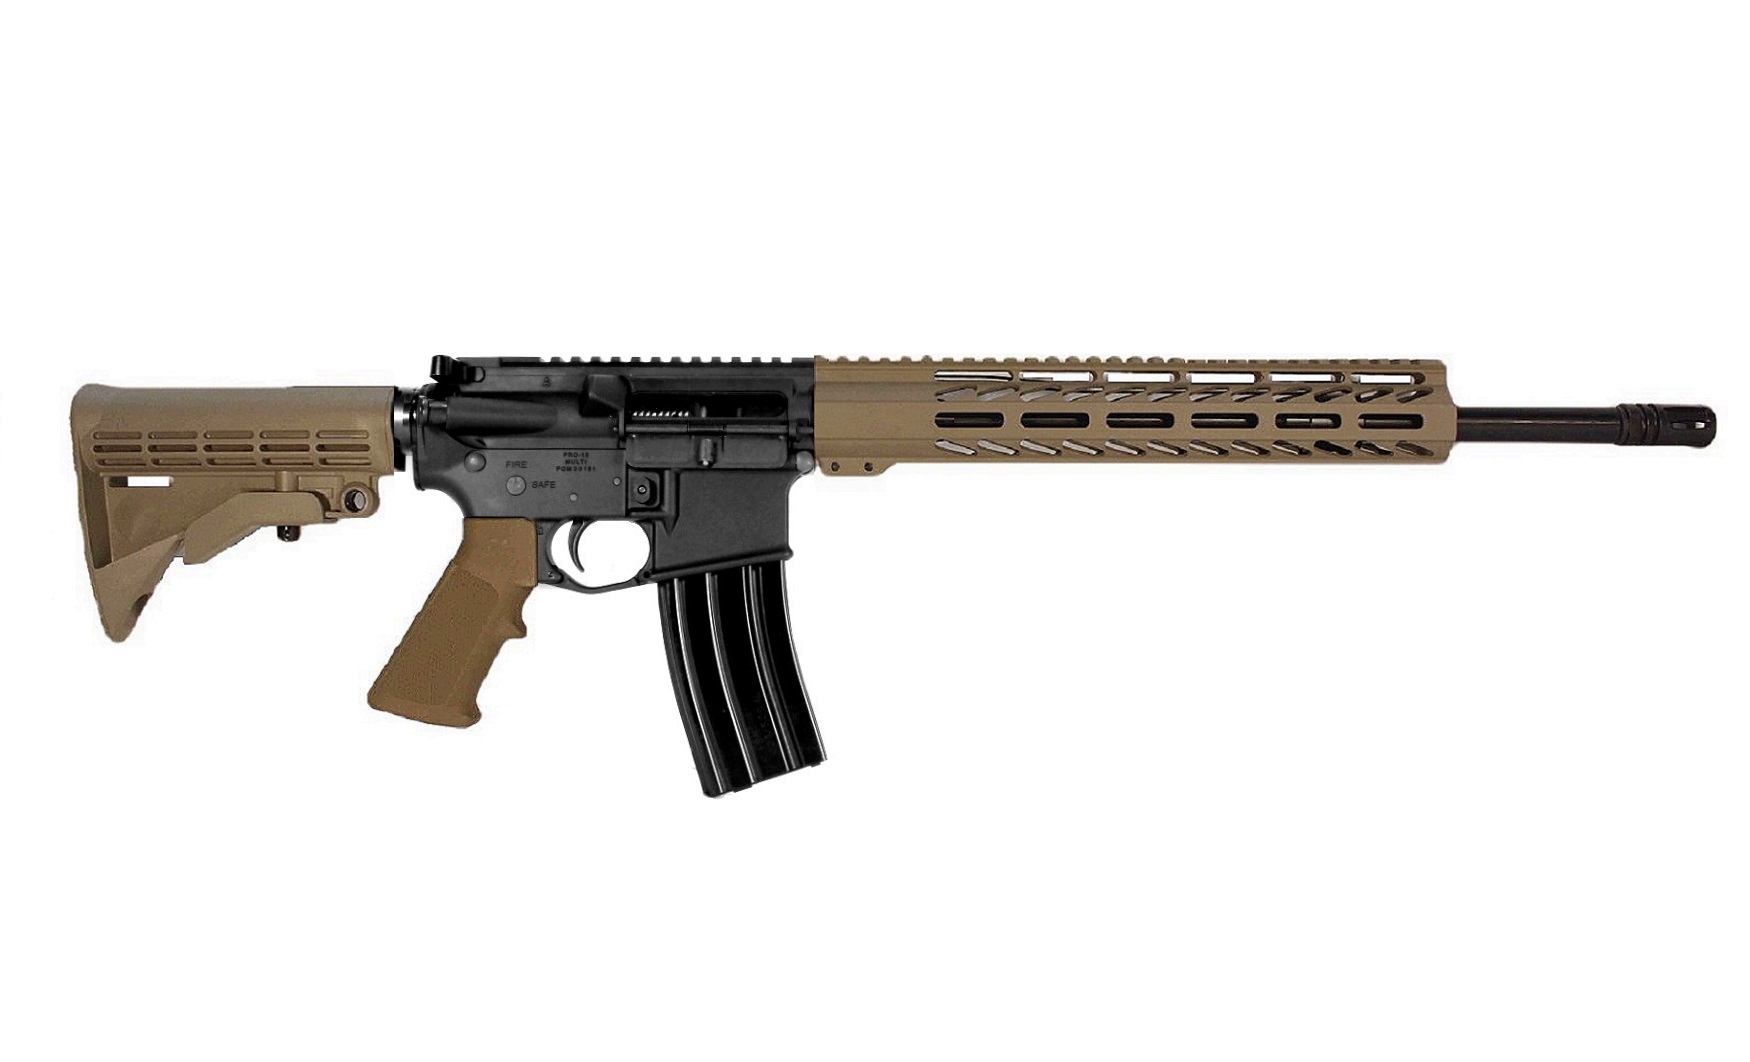 16 inch 6.5 Grendel AR-15 Rifle in BLK/FDE